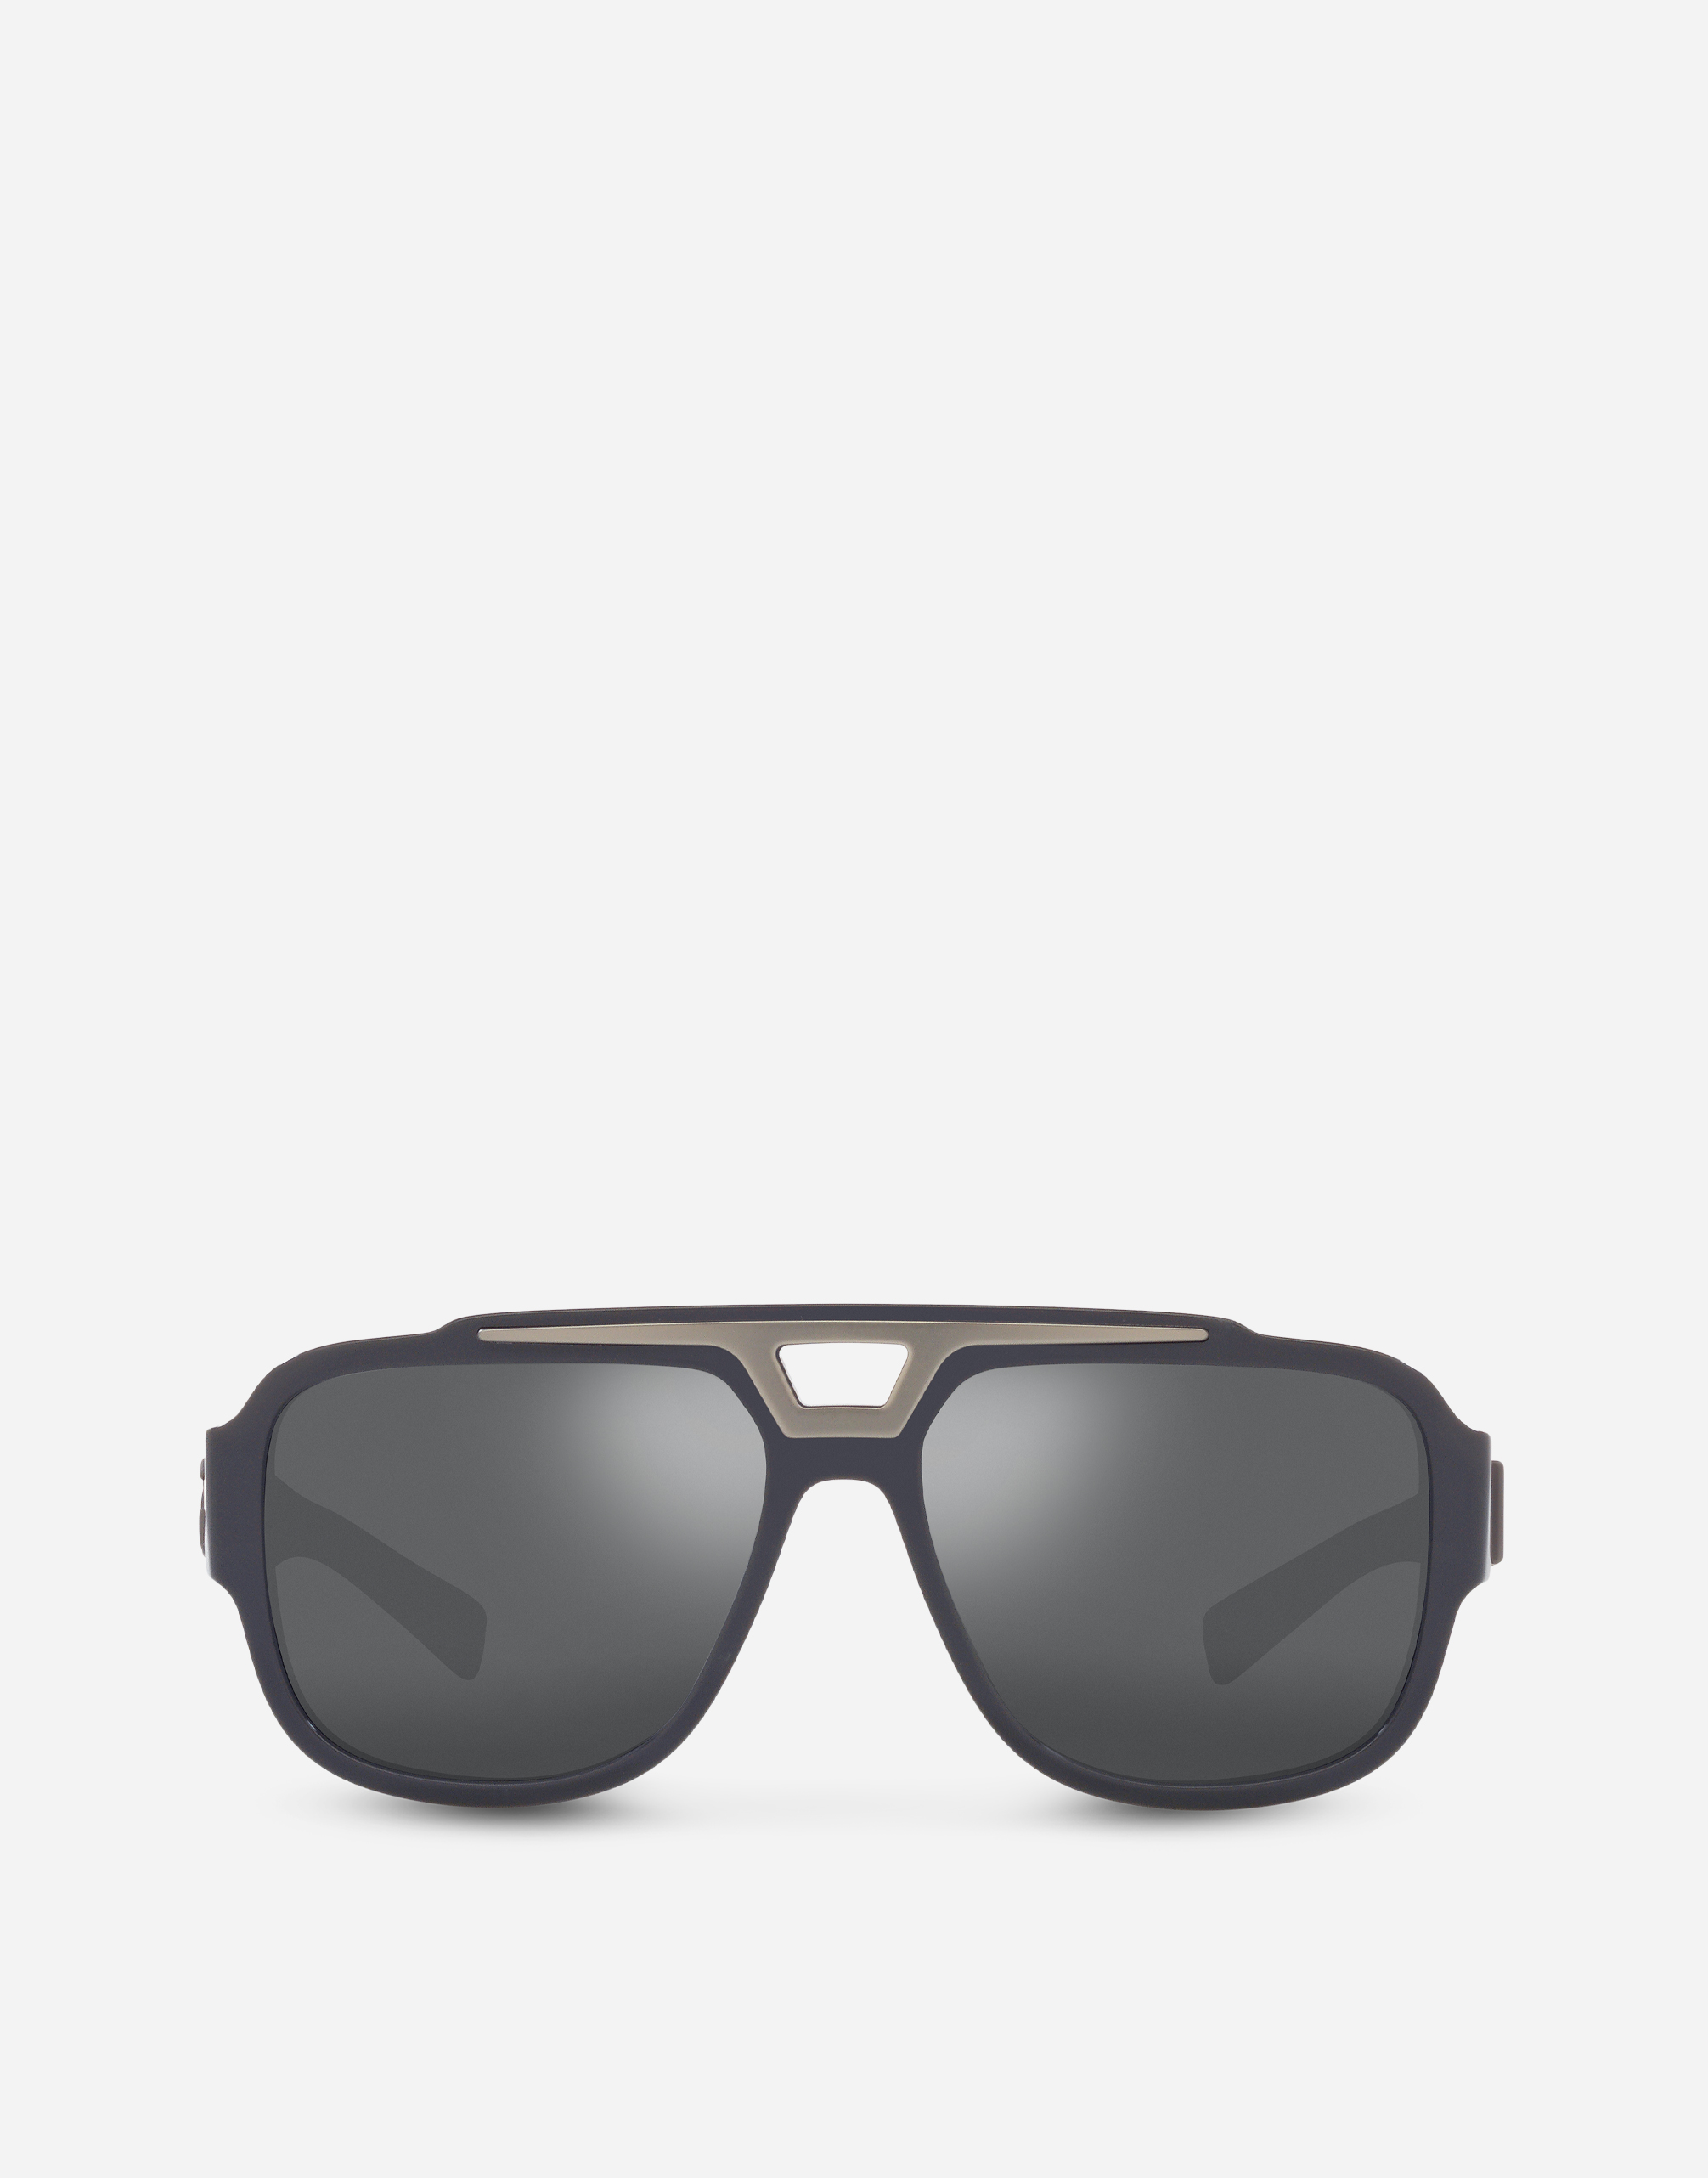 DG crossed sunglasses  in Grey